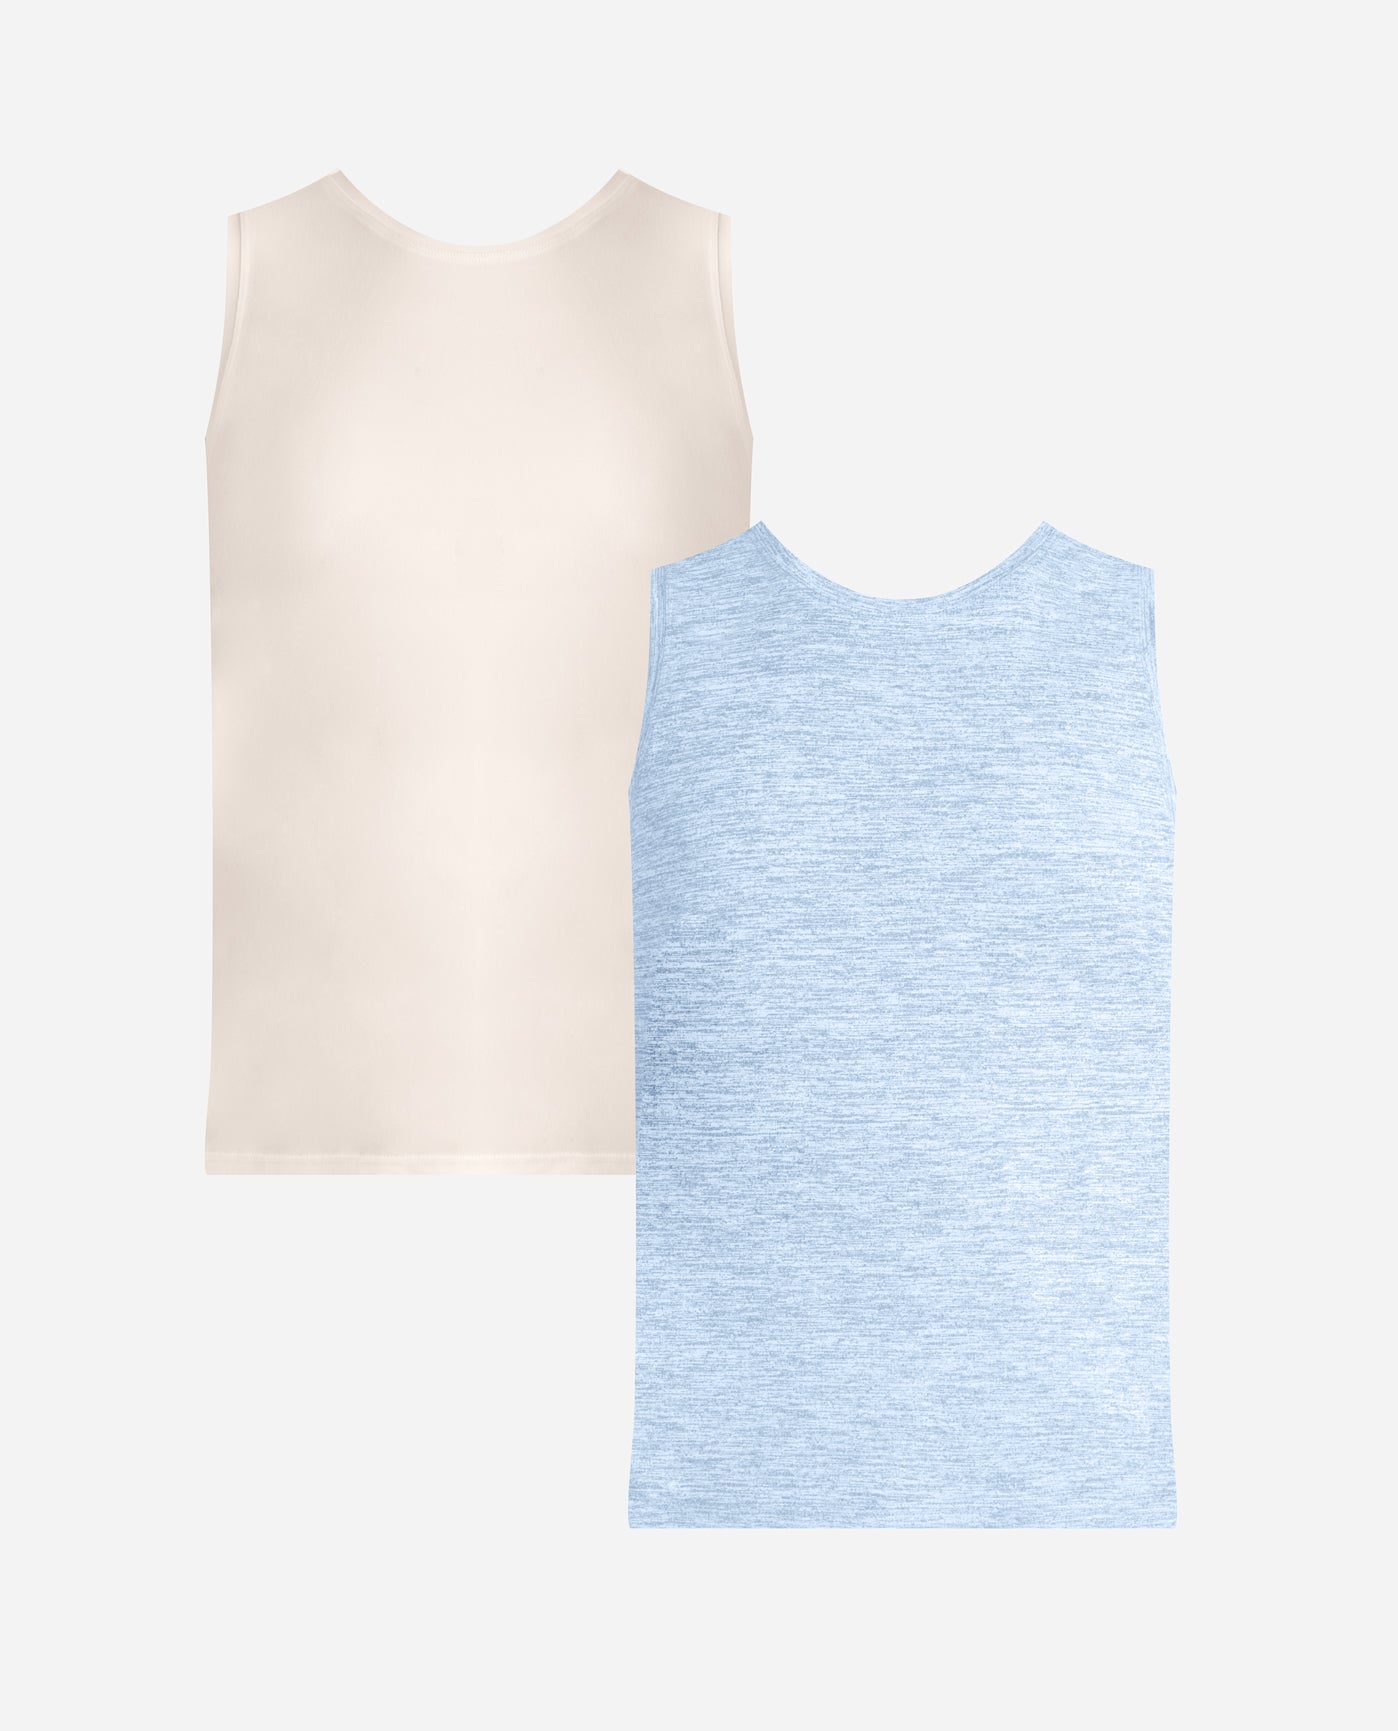 Nike Factory Store Blue Dance Tank Tops & Sleeveless Shirts.